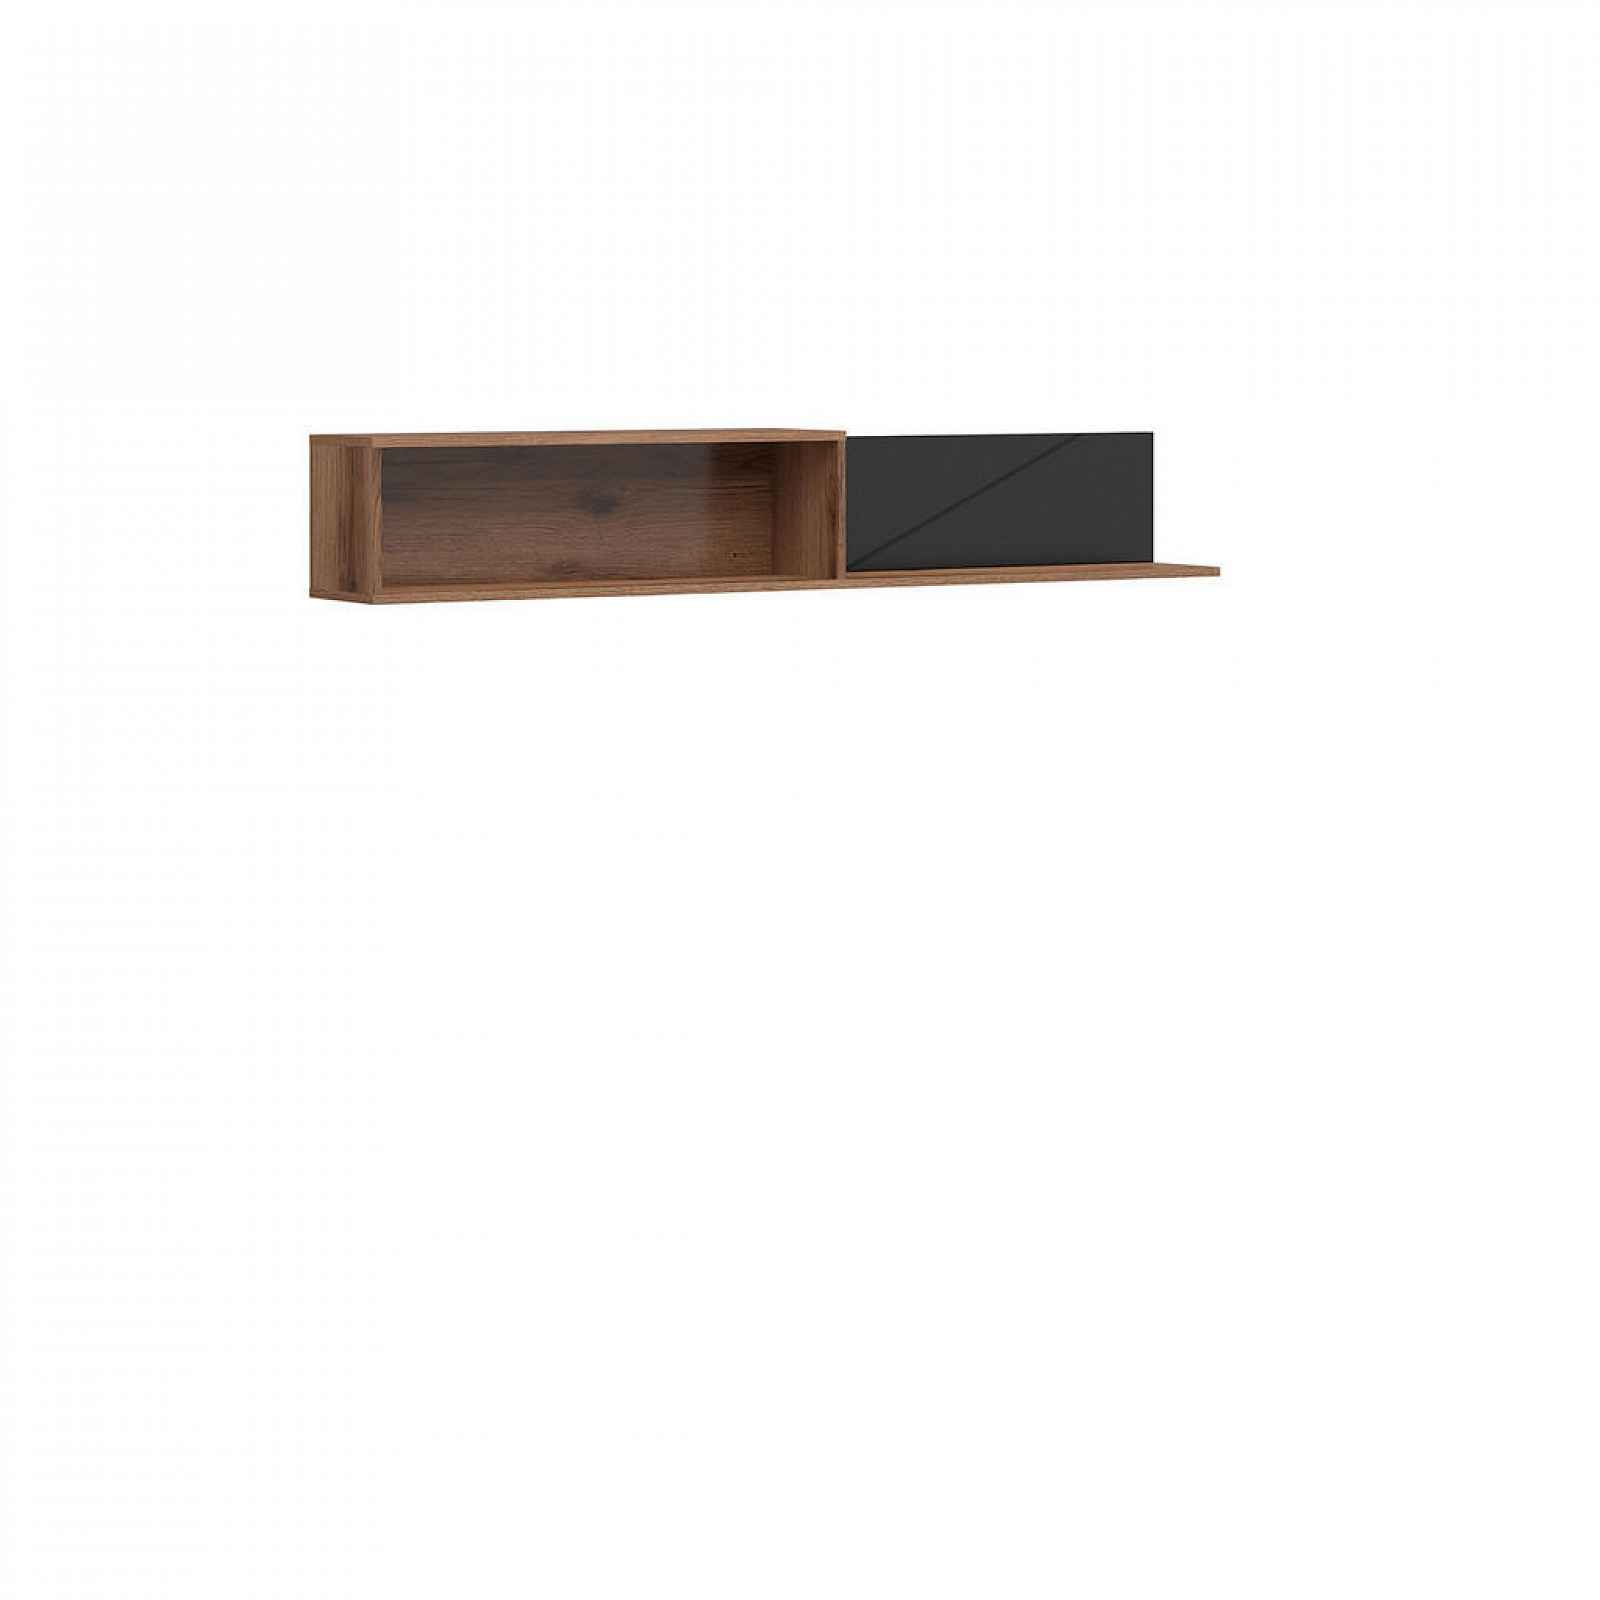 Xora NÁSTĚNNÝ REGÁL, černá, barvy dubu, 156/25/22 cm - 002427006804